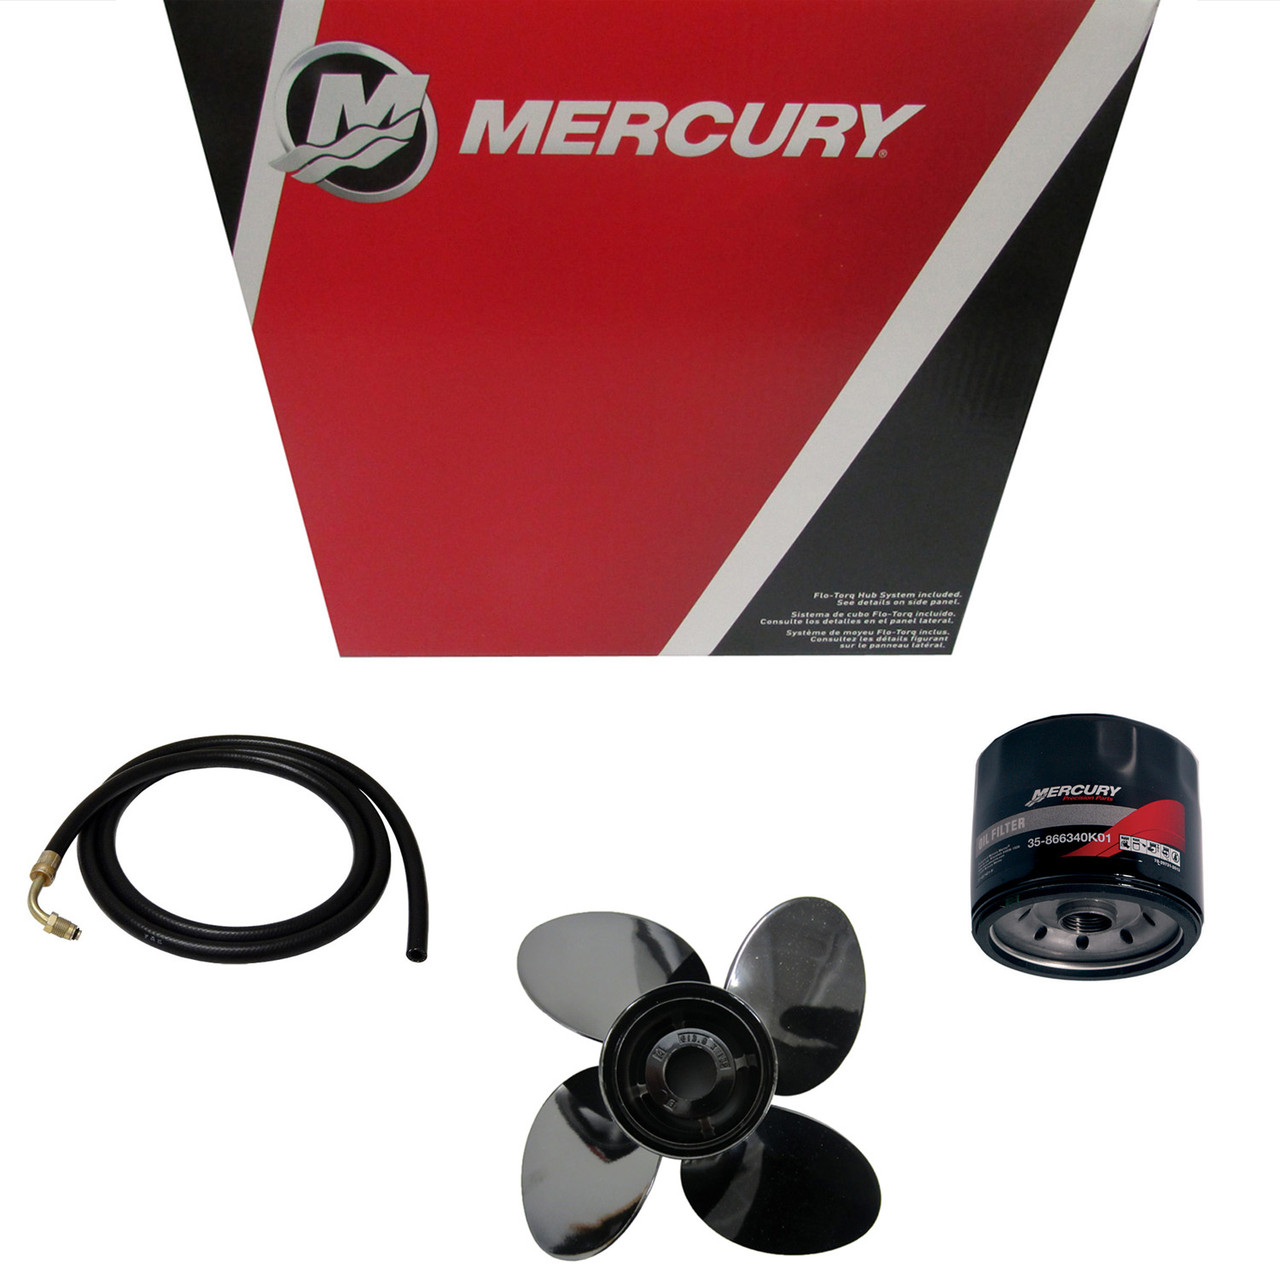 Mercury Marine / Mercruiser New OEM Fuel Line Kit, 32-865257A03